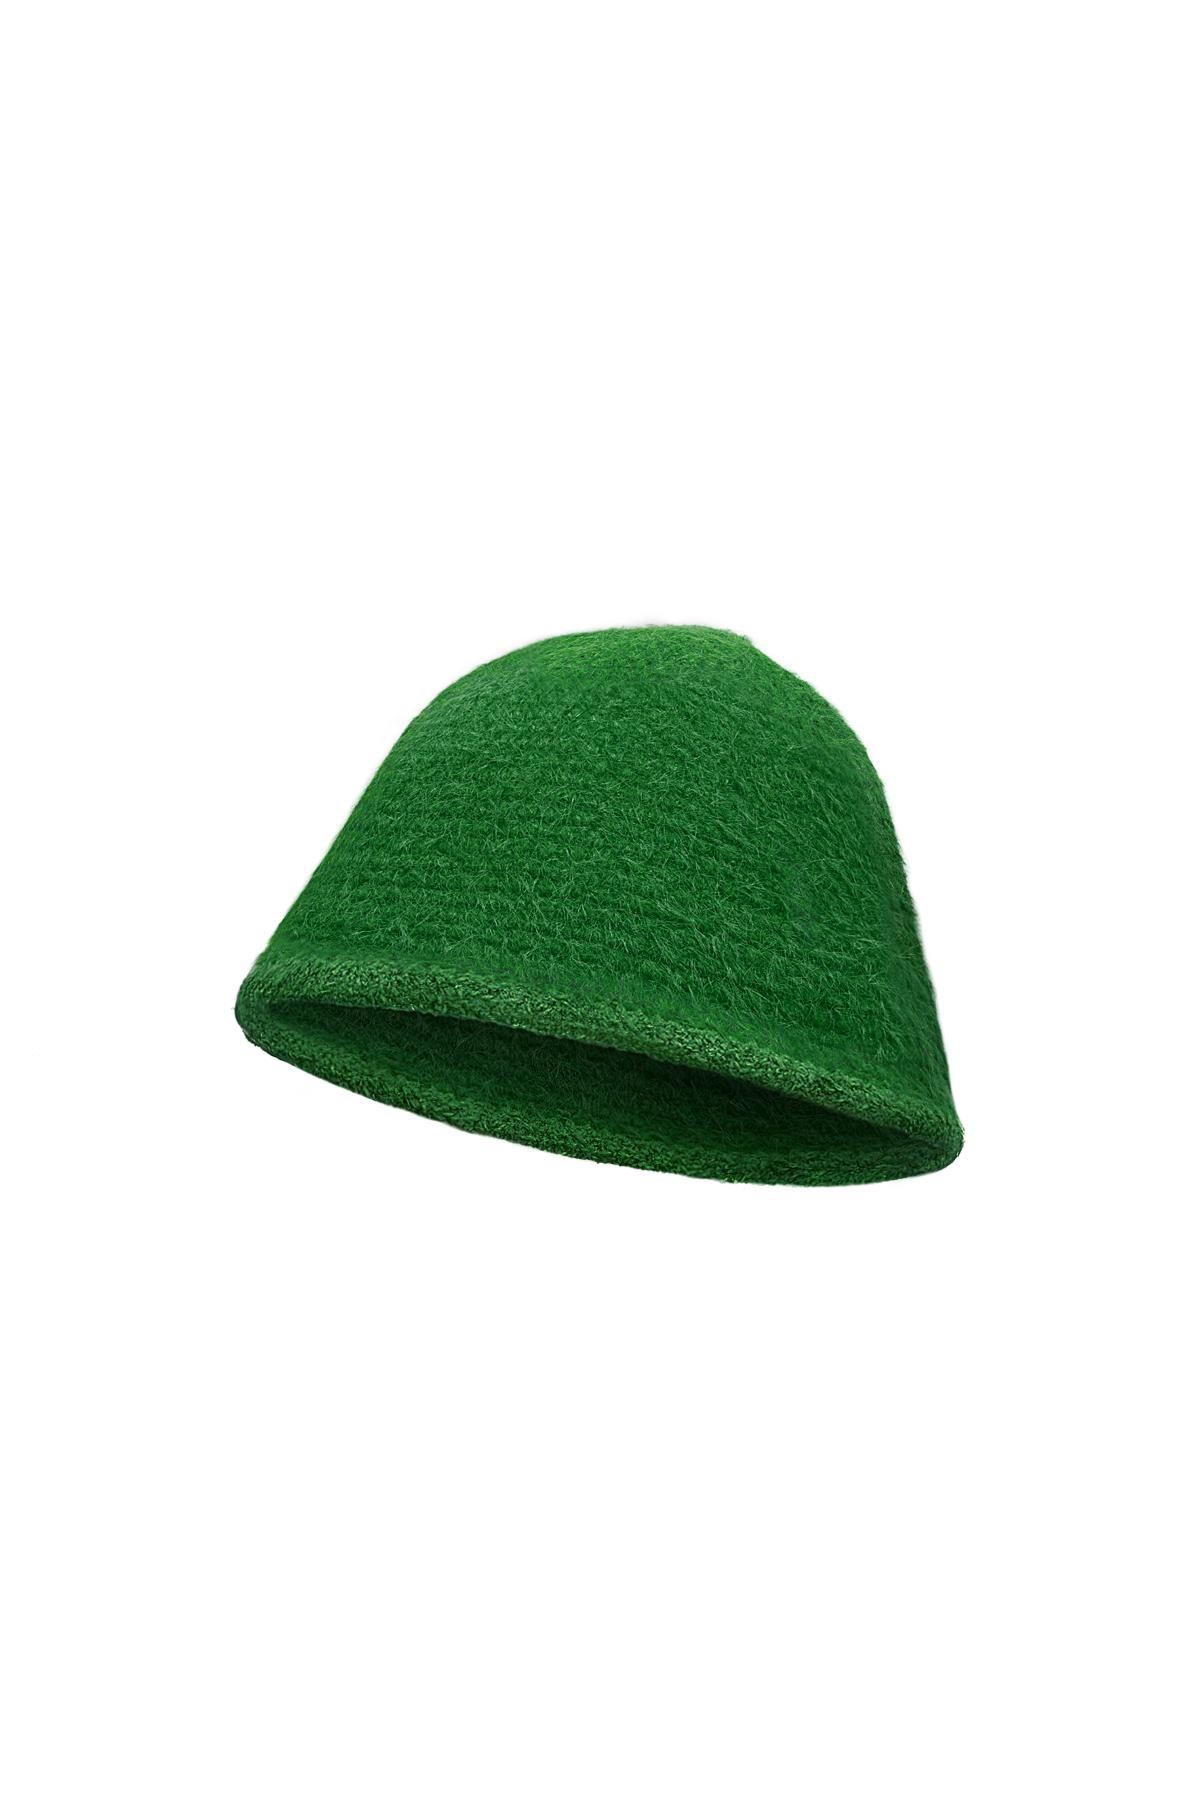 Fisherman's hat basic Green Polyester 